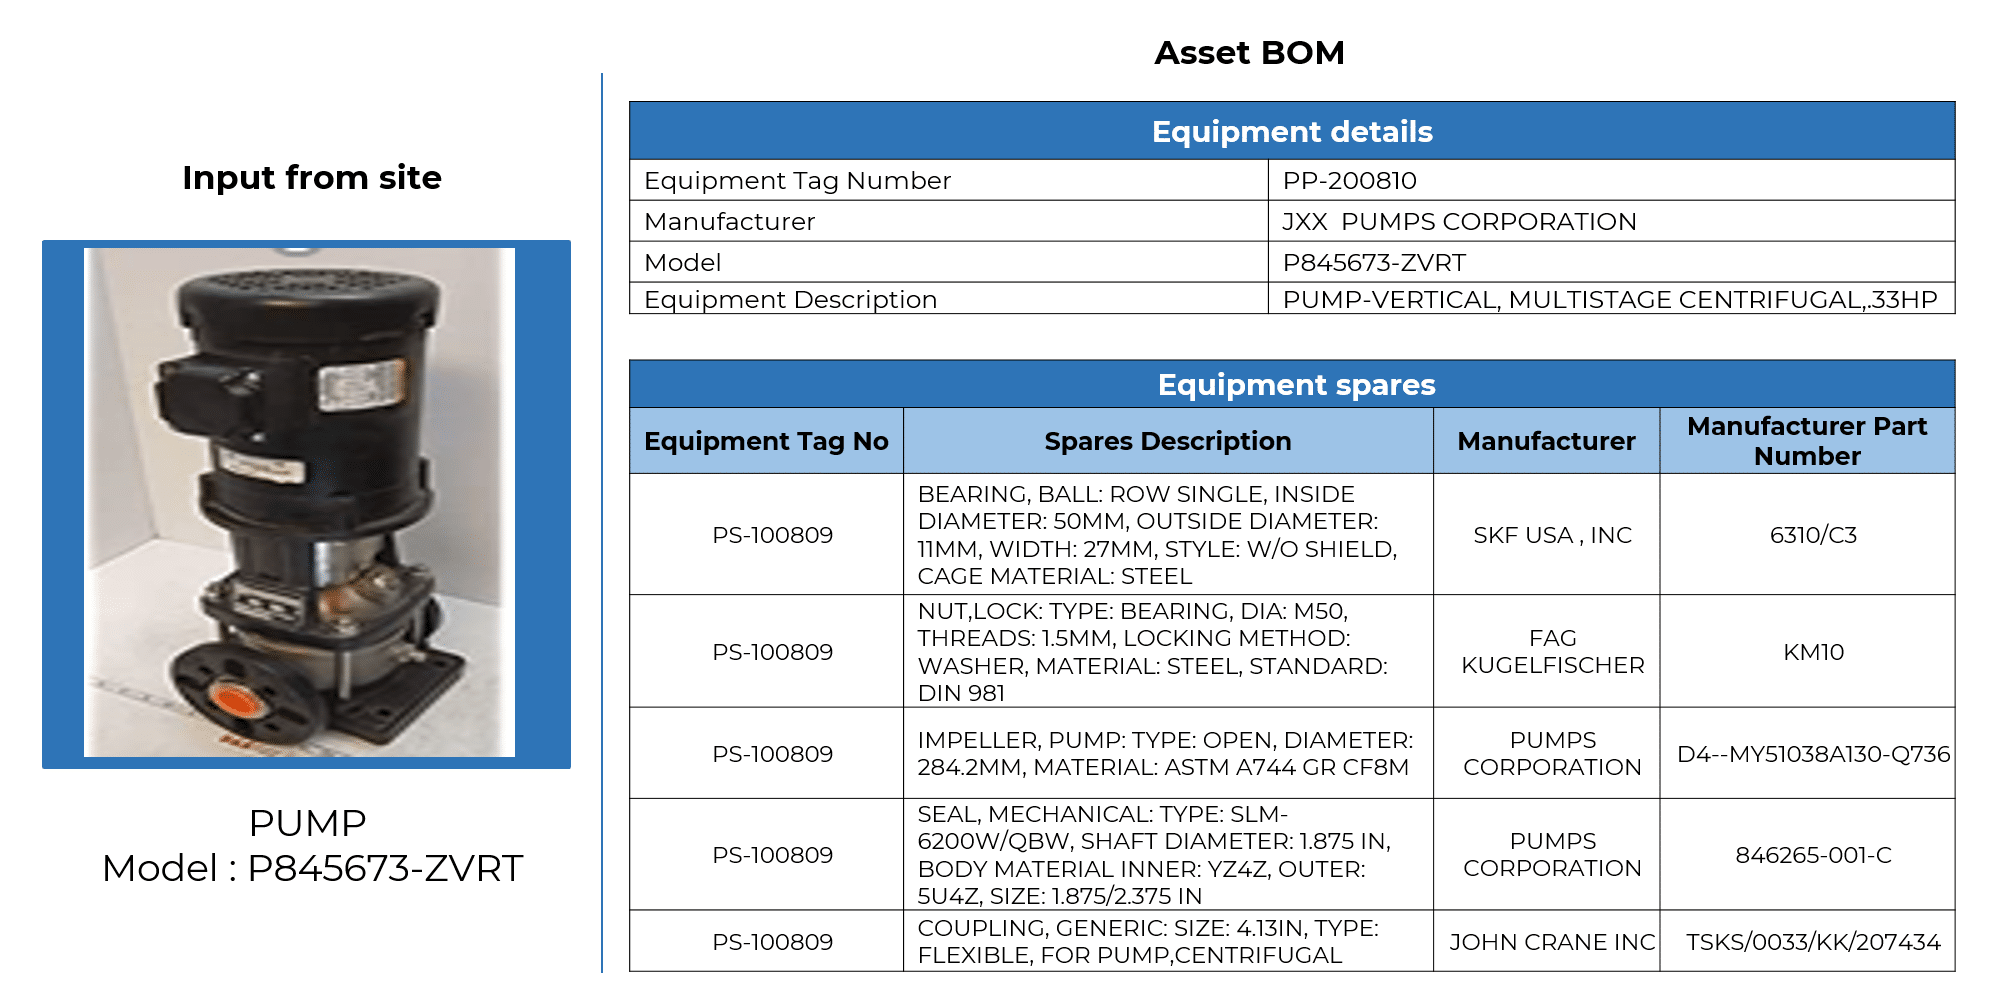 Asset BOM Sample